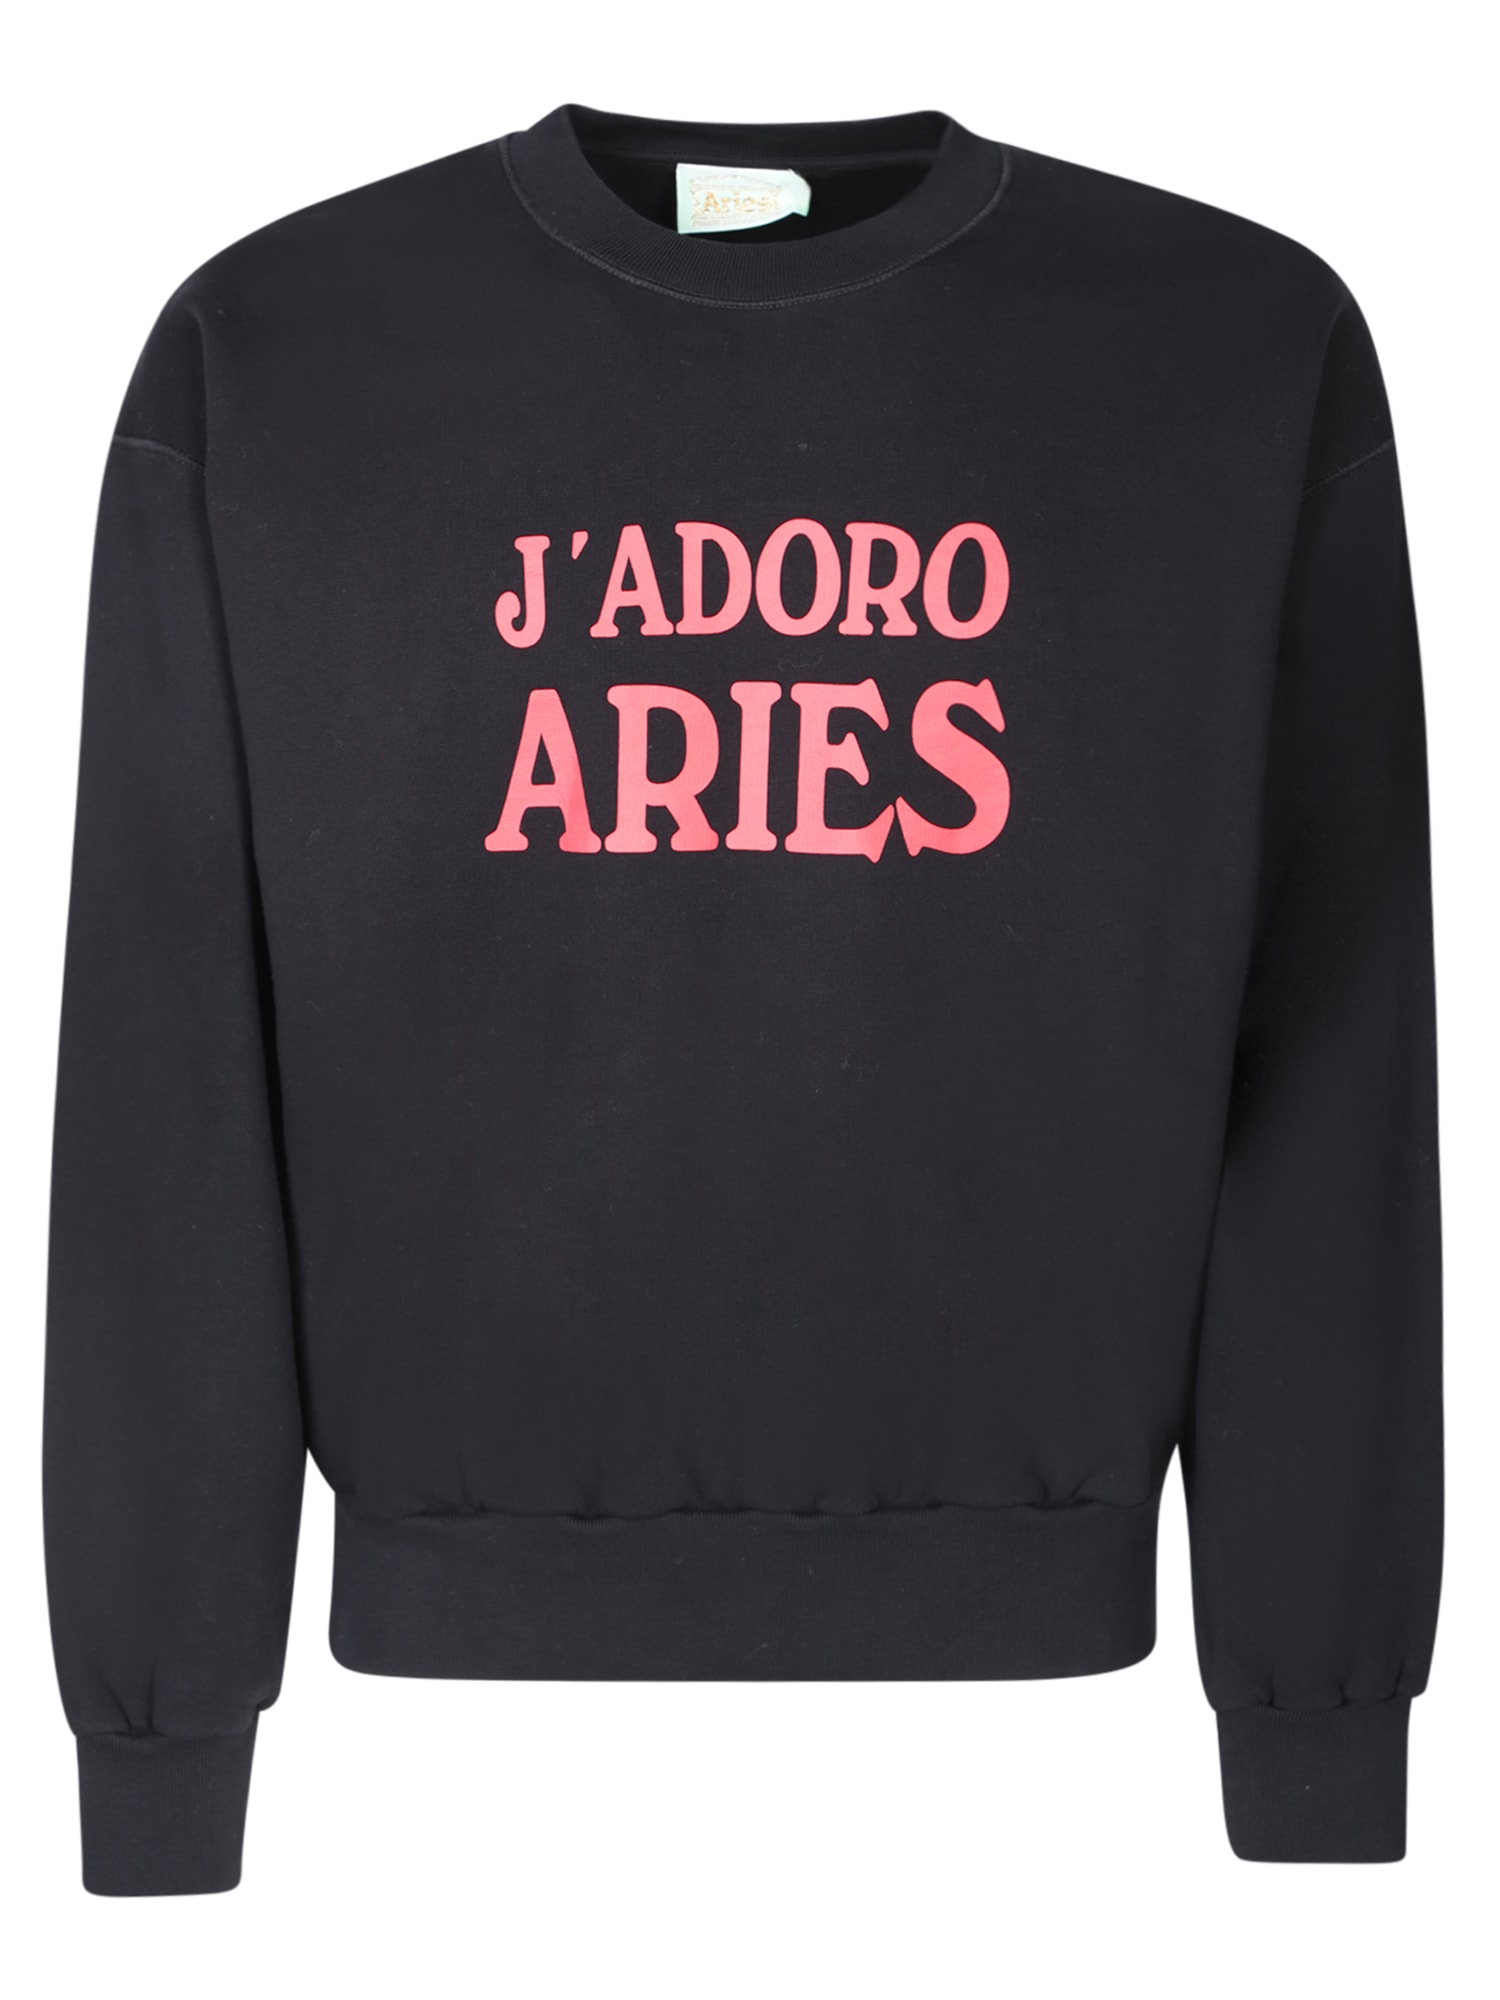 Shop Aries Jadoro Black Sweatshirt